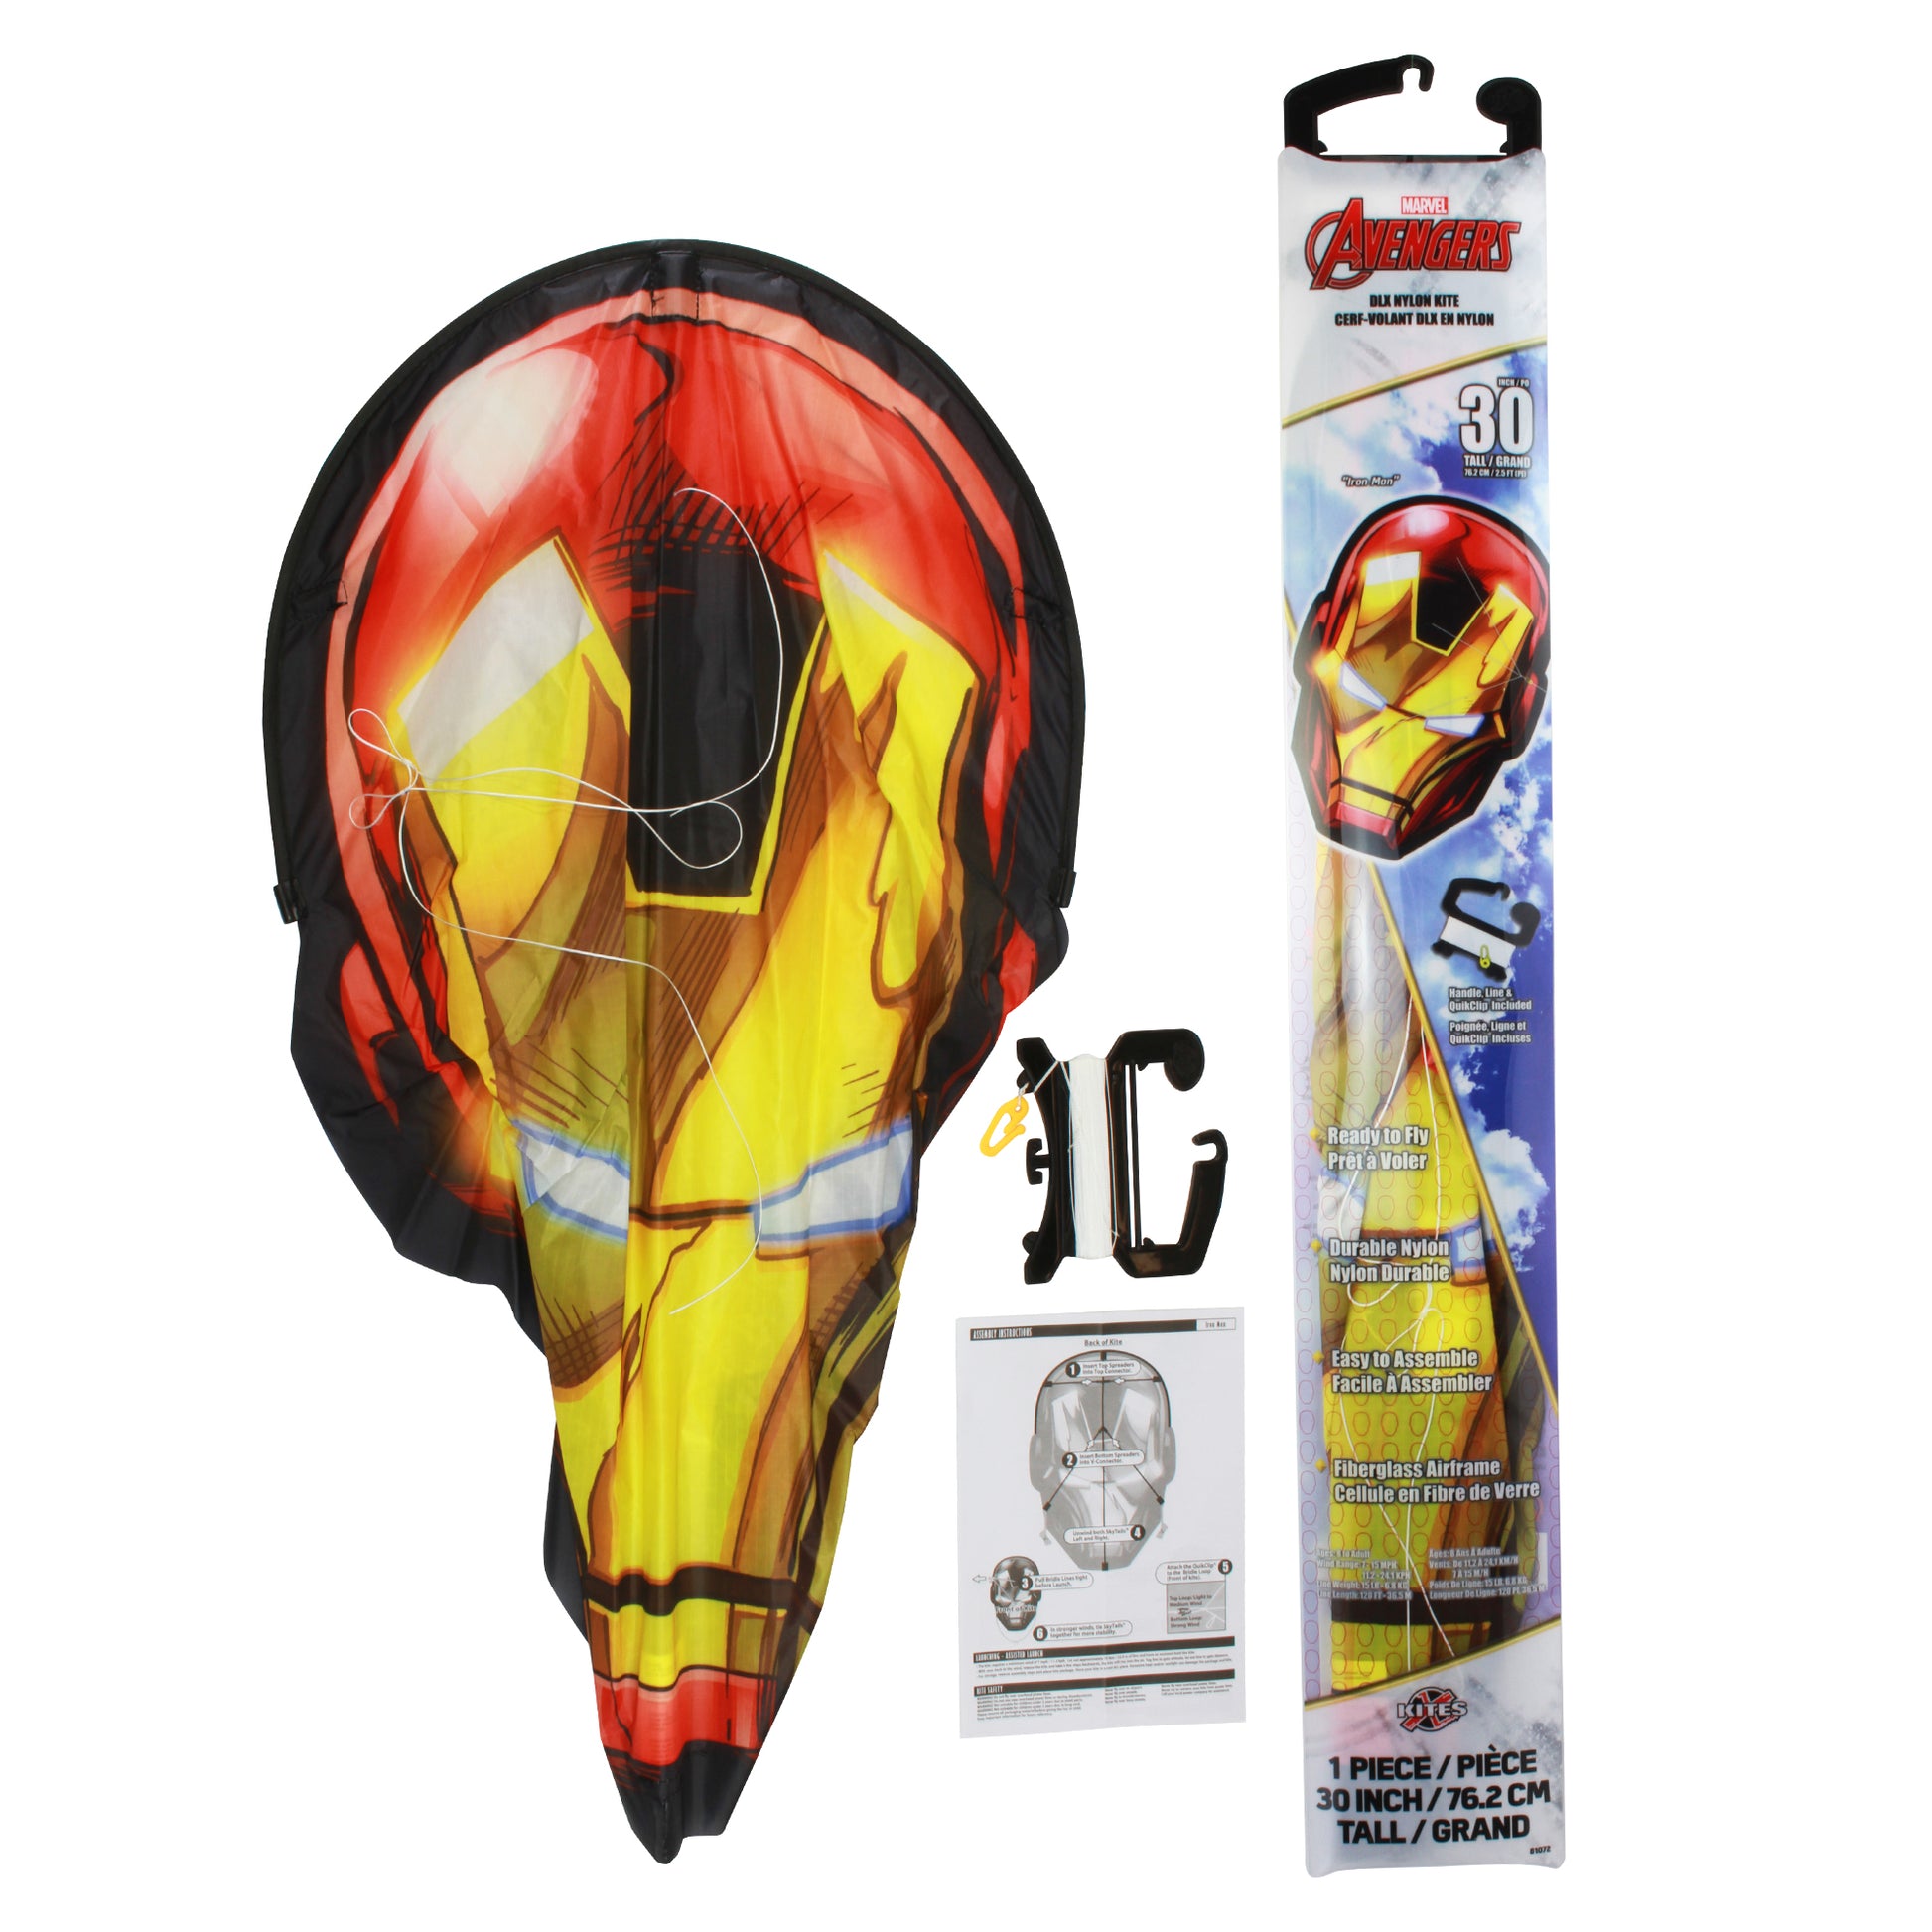 X Kites Face Kite Marvel Avengers Iron Man DLX Nylon Kite packaging and contents